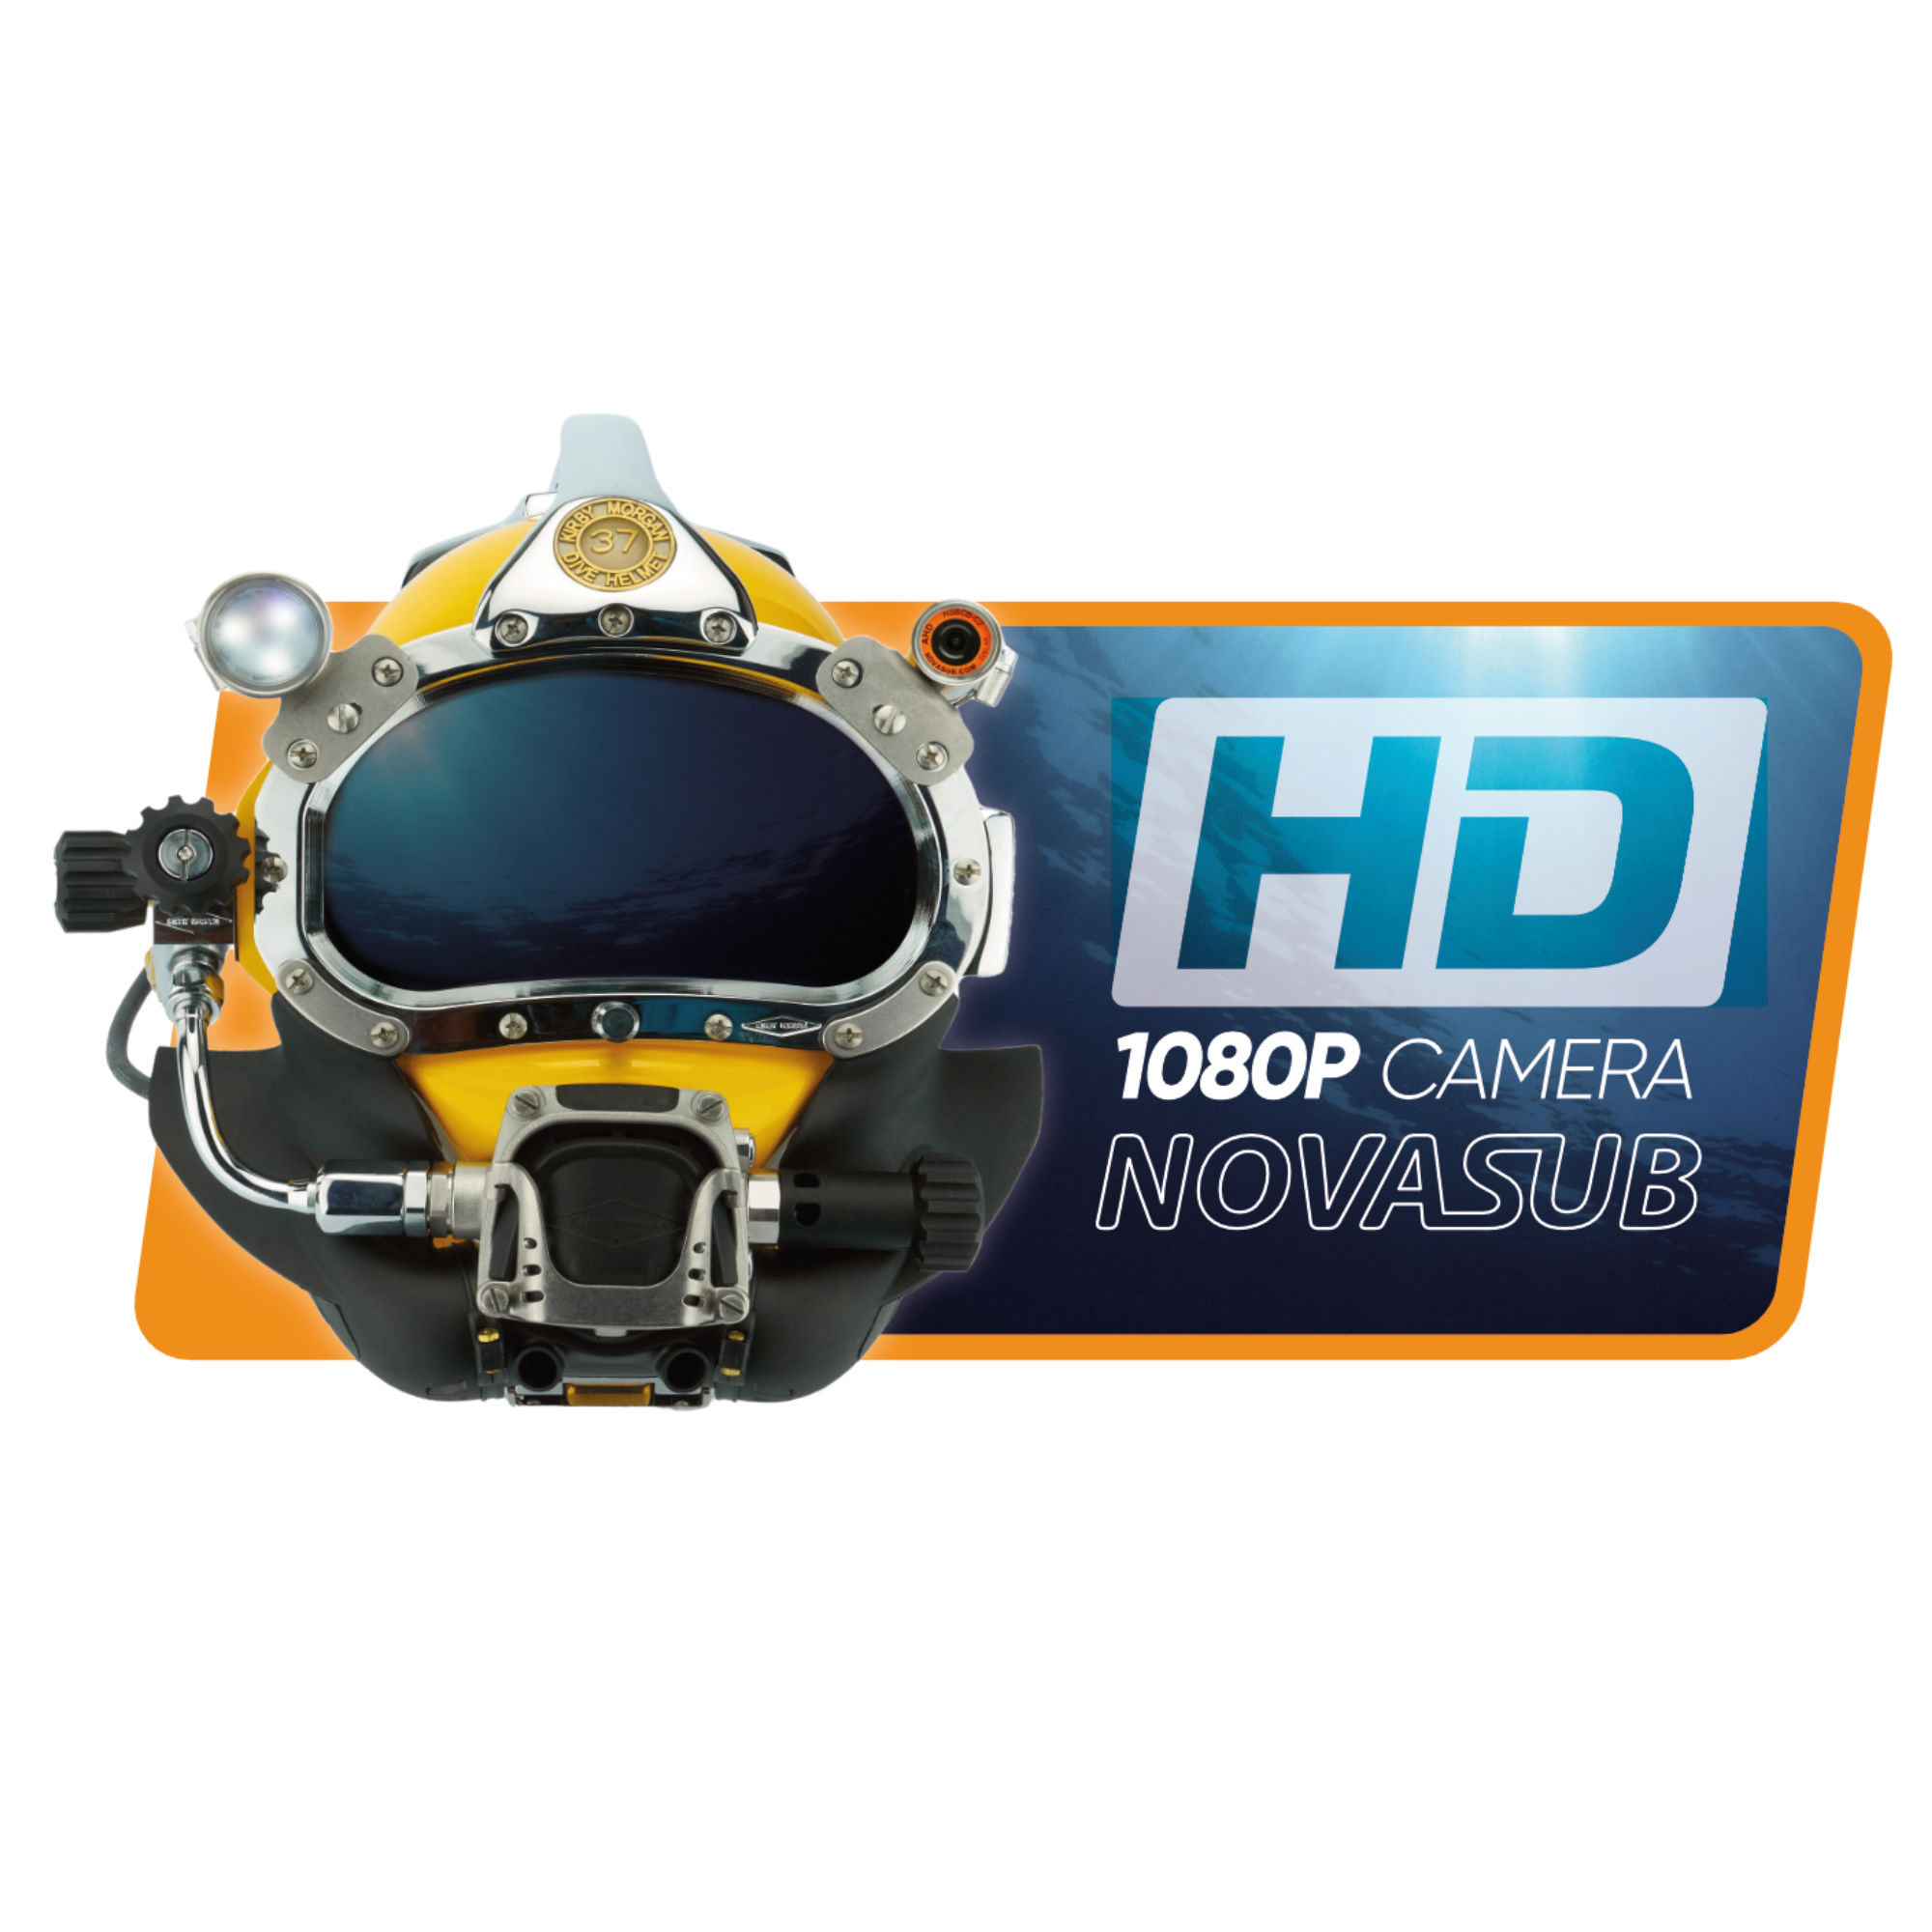 HD - High Definition Analog Video